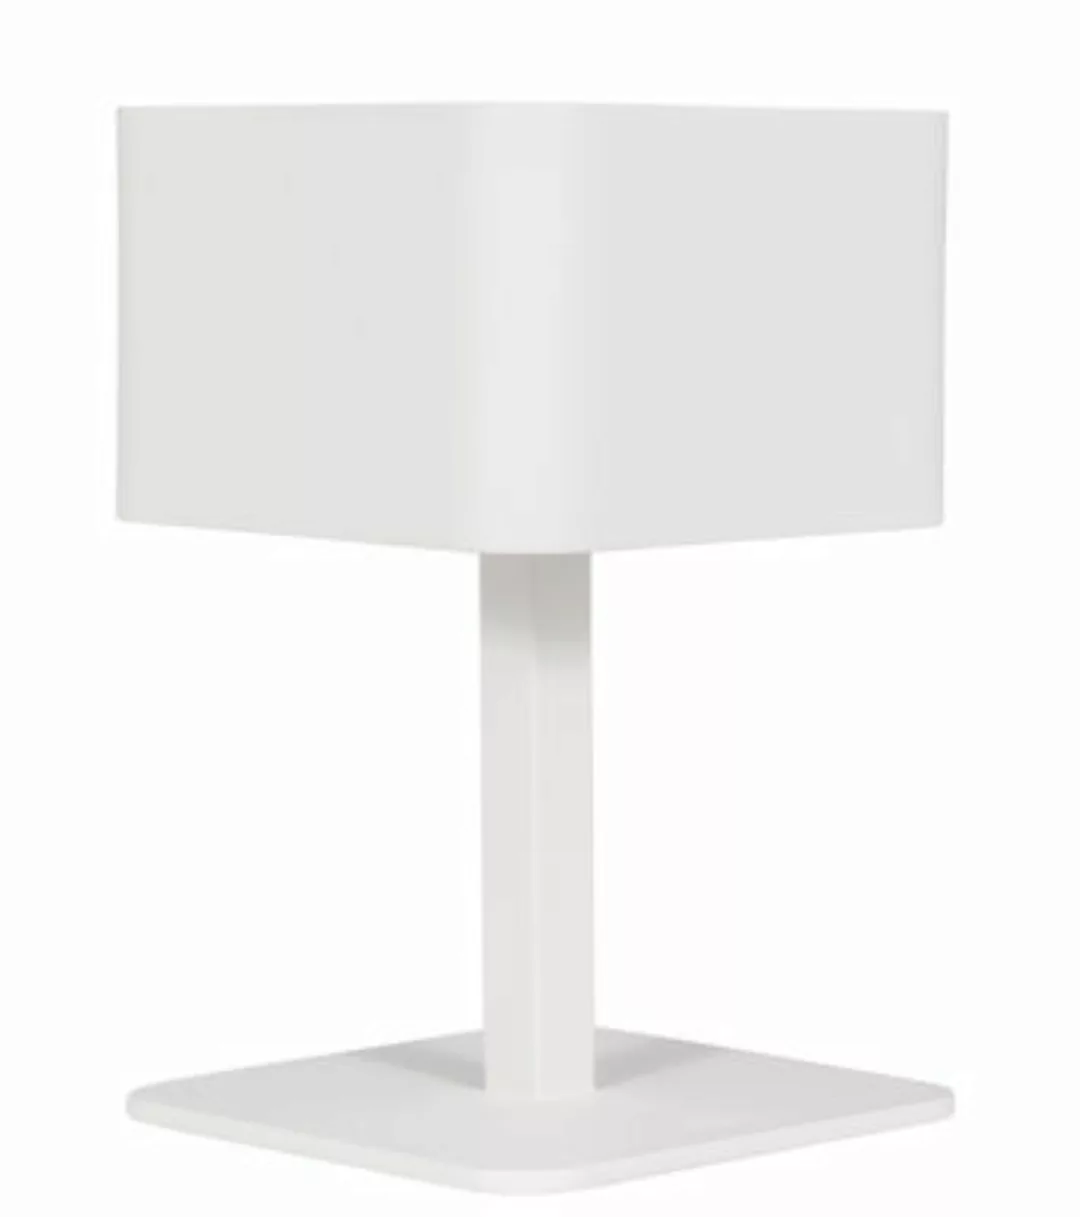 Outdoor-Solarlampe La Lampe Pose 02 metall weiß / LED - kabellos - Maiori - günstig online kaufen